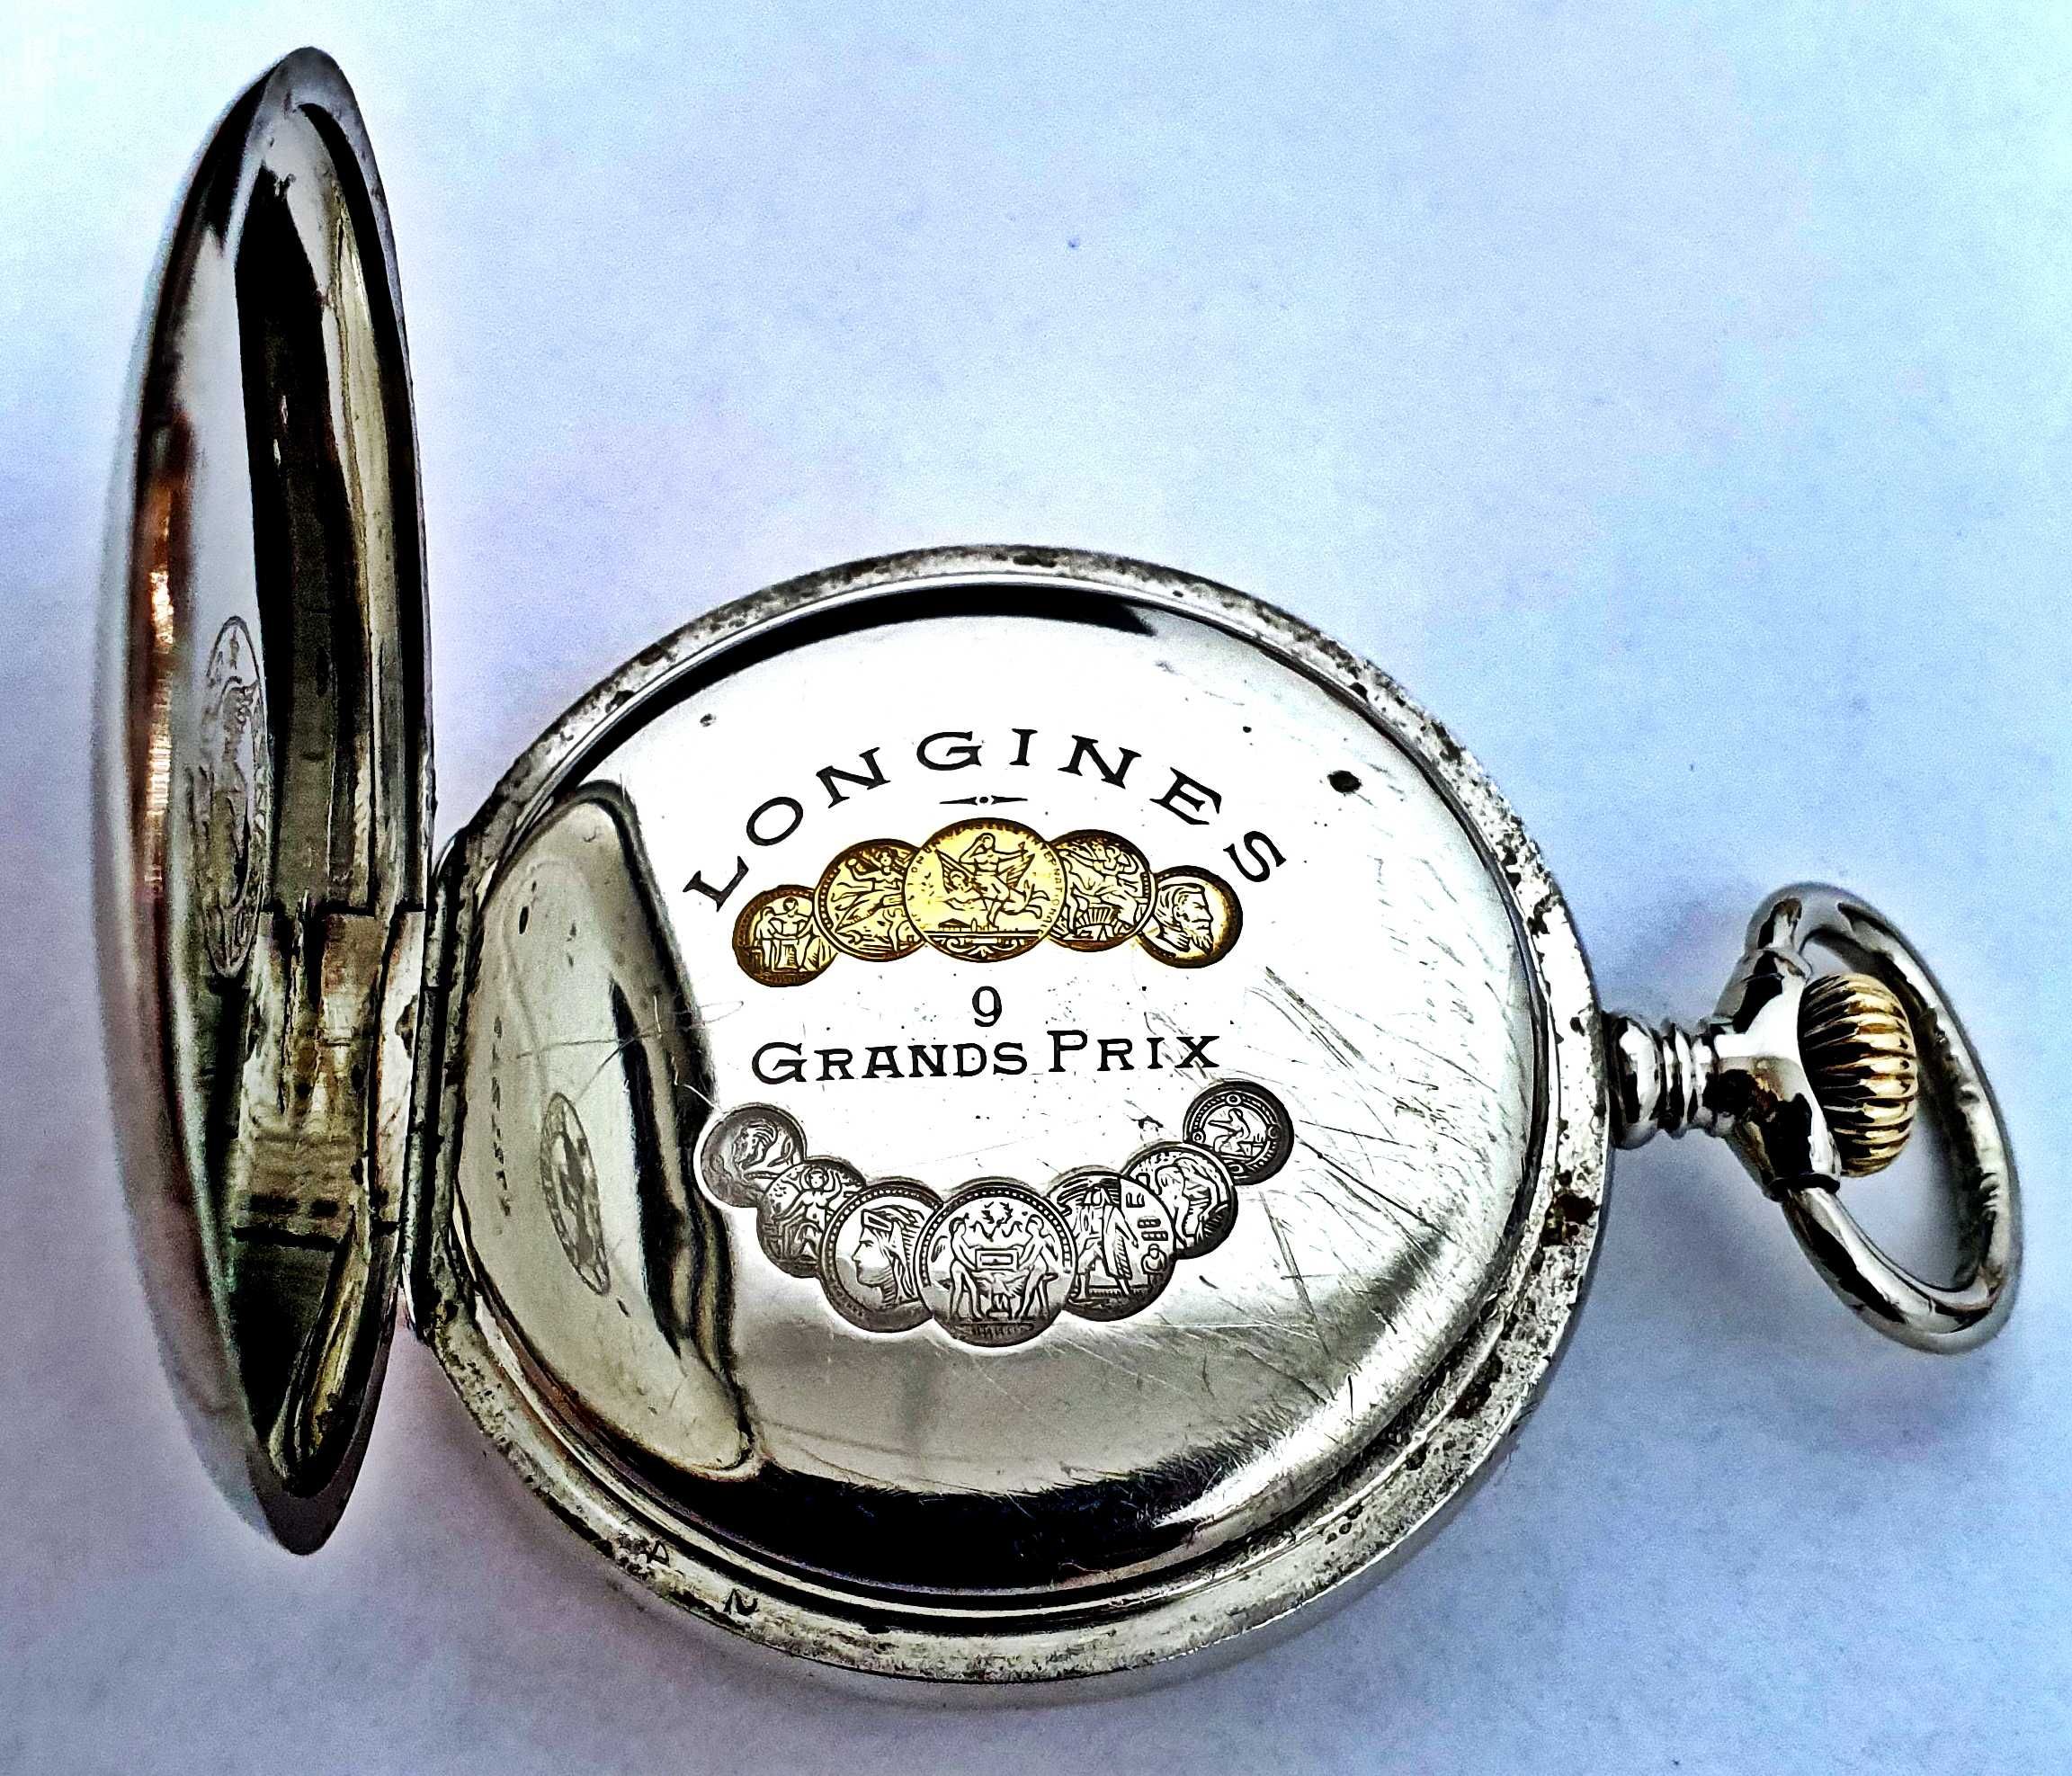 ceas de buzunar Longines Grands Prix 9 de colectie, cca 1927